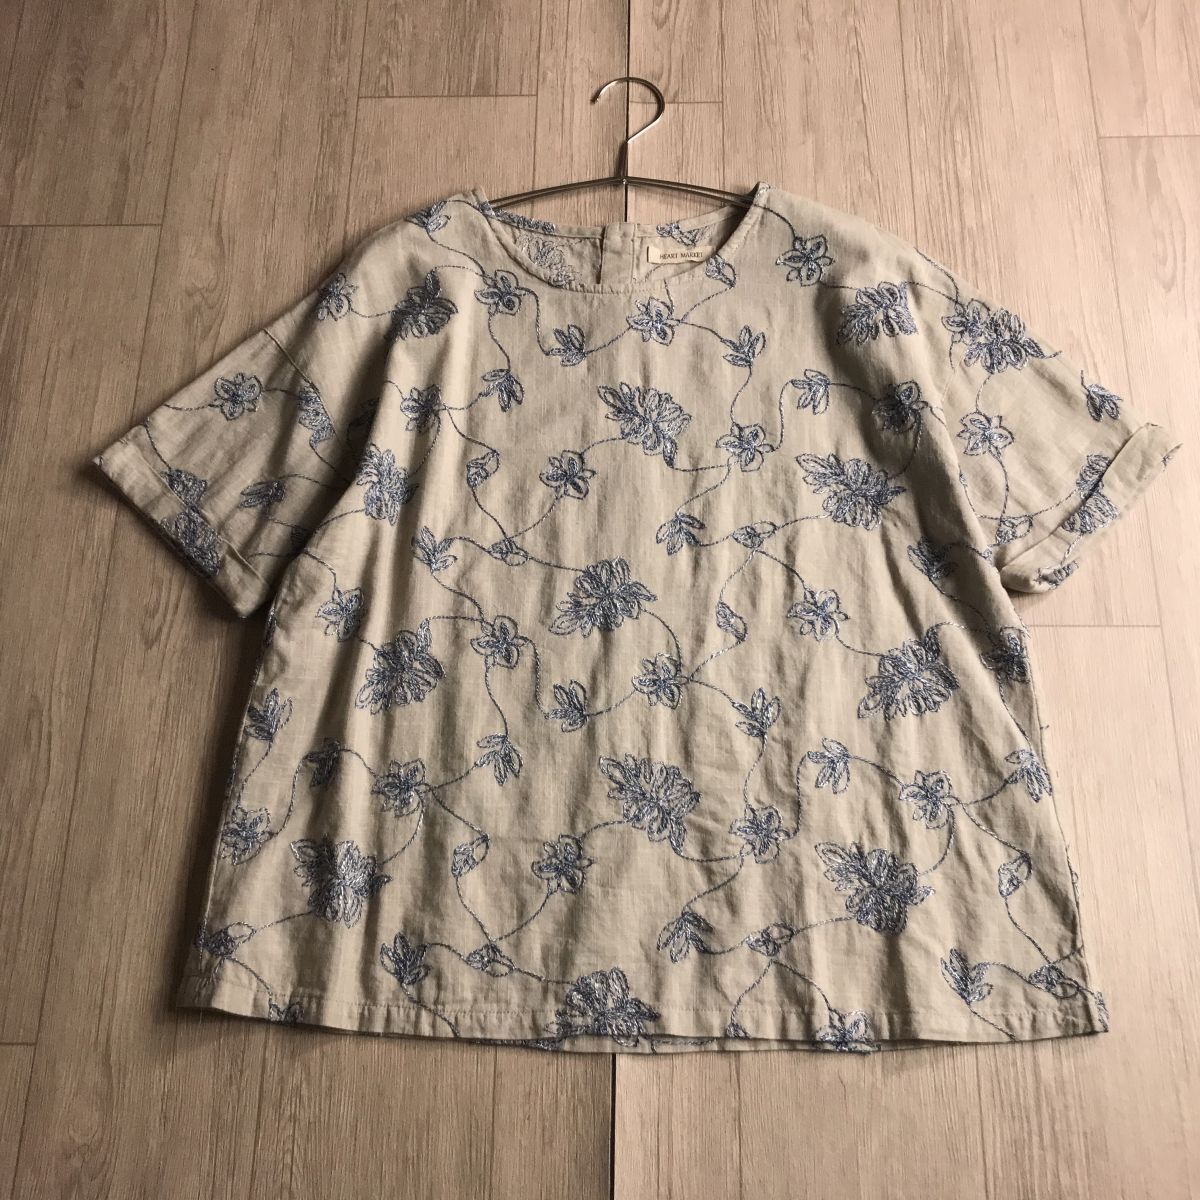 100 иен старт * HEART MARKET Heart рынок вышивка дизайн ширина свободно body type покрытие блуза свободный размер 